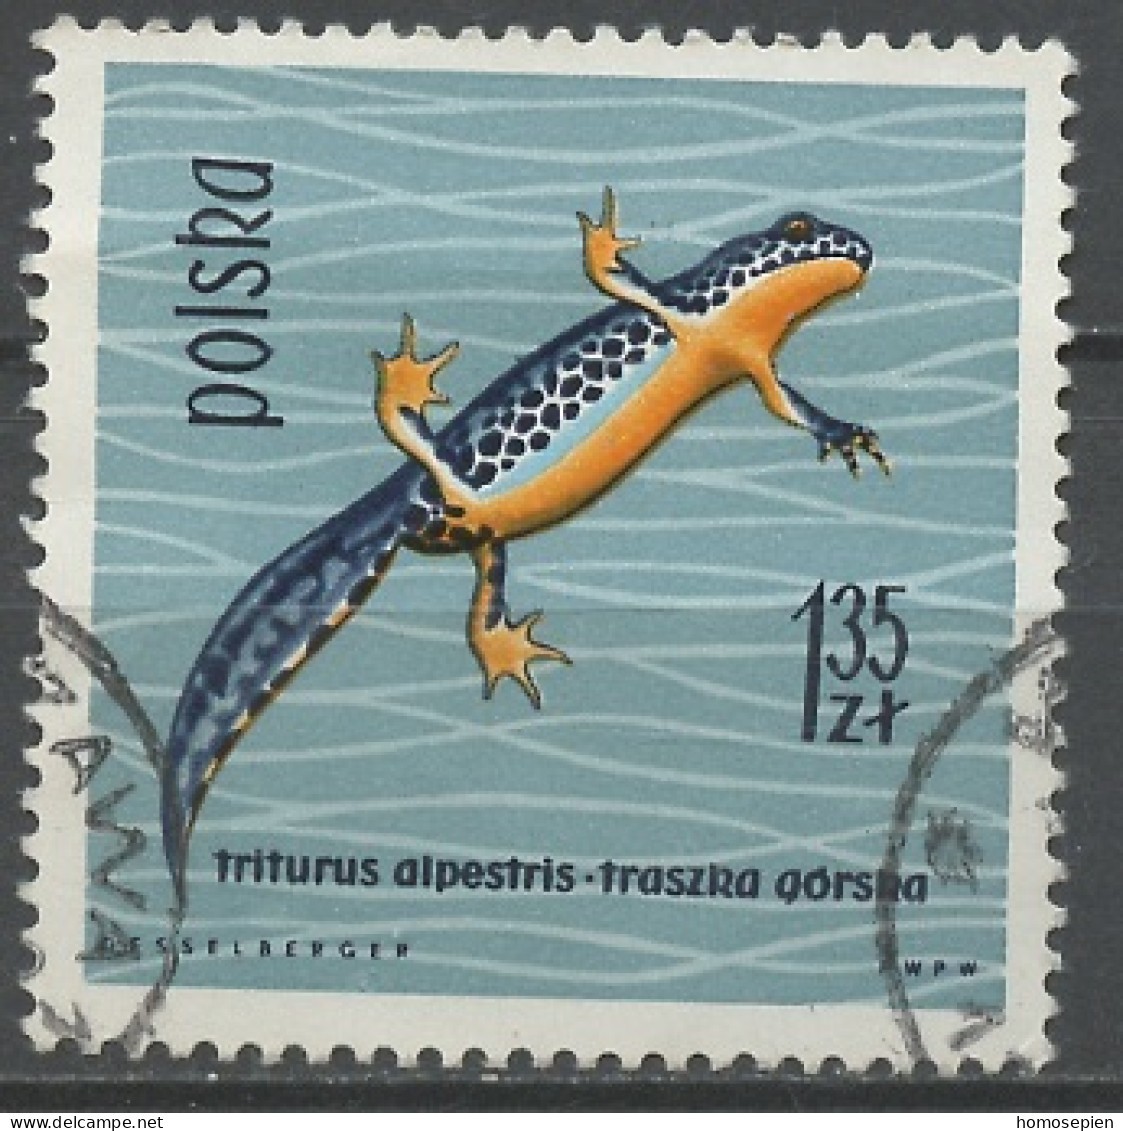 Pologne - Poland - Polen 1963 Y&T N°1265 - Michel N°1399 (o) - 1,35z Triton - Used Stamps